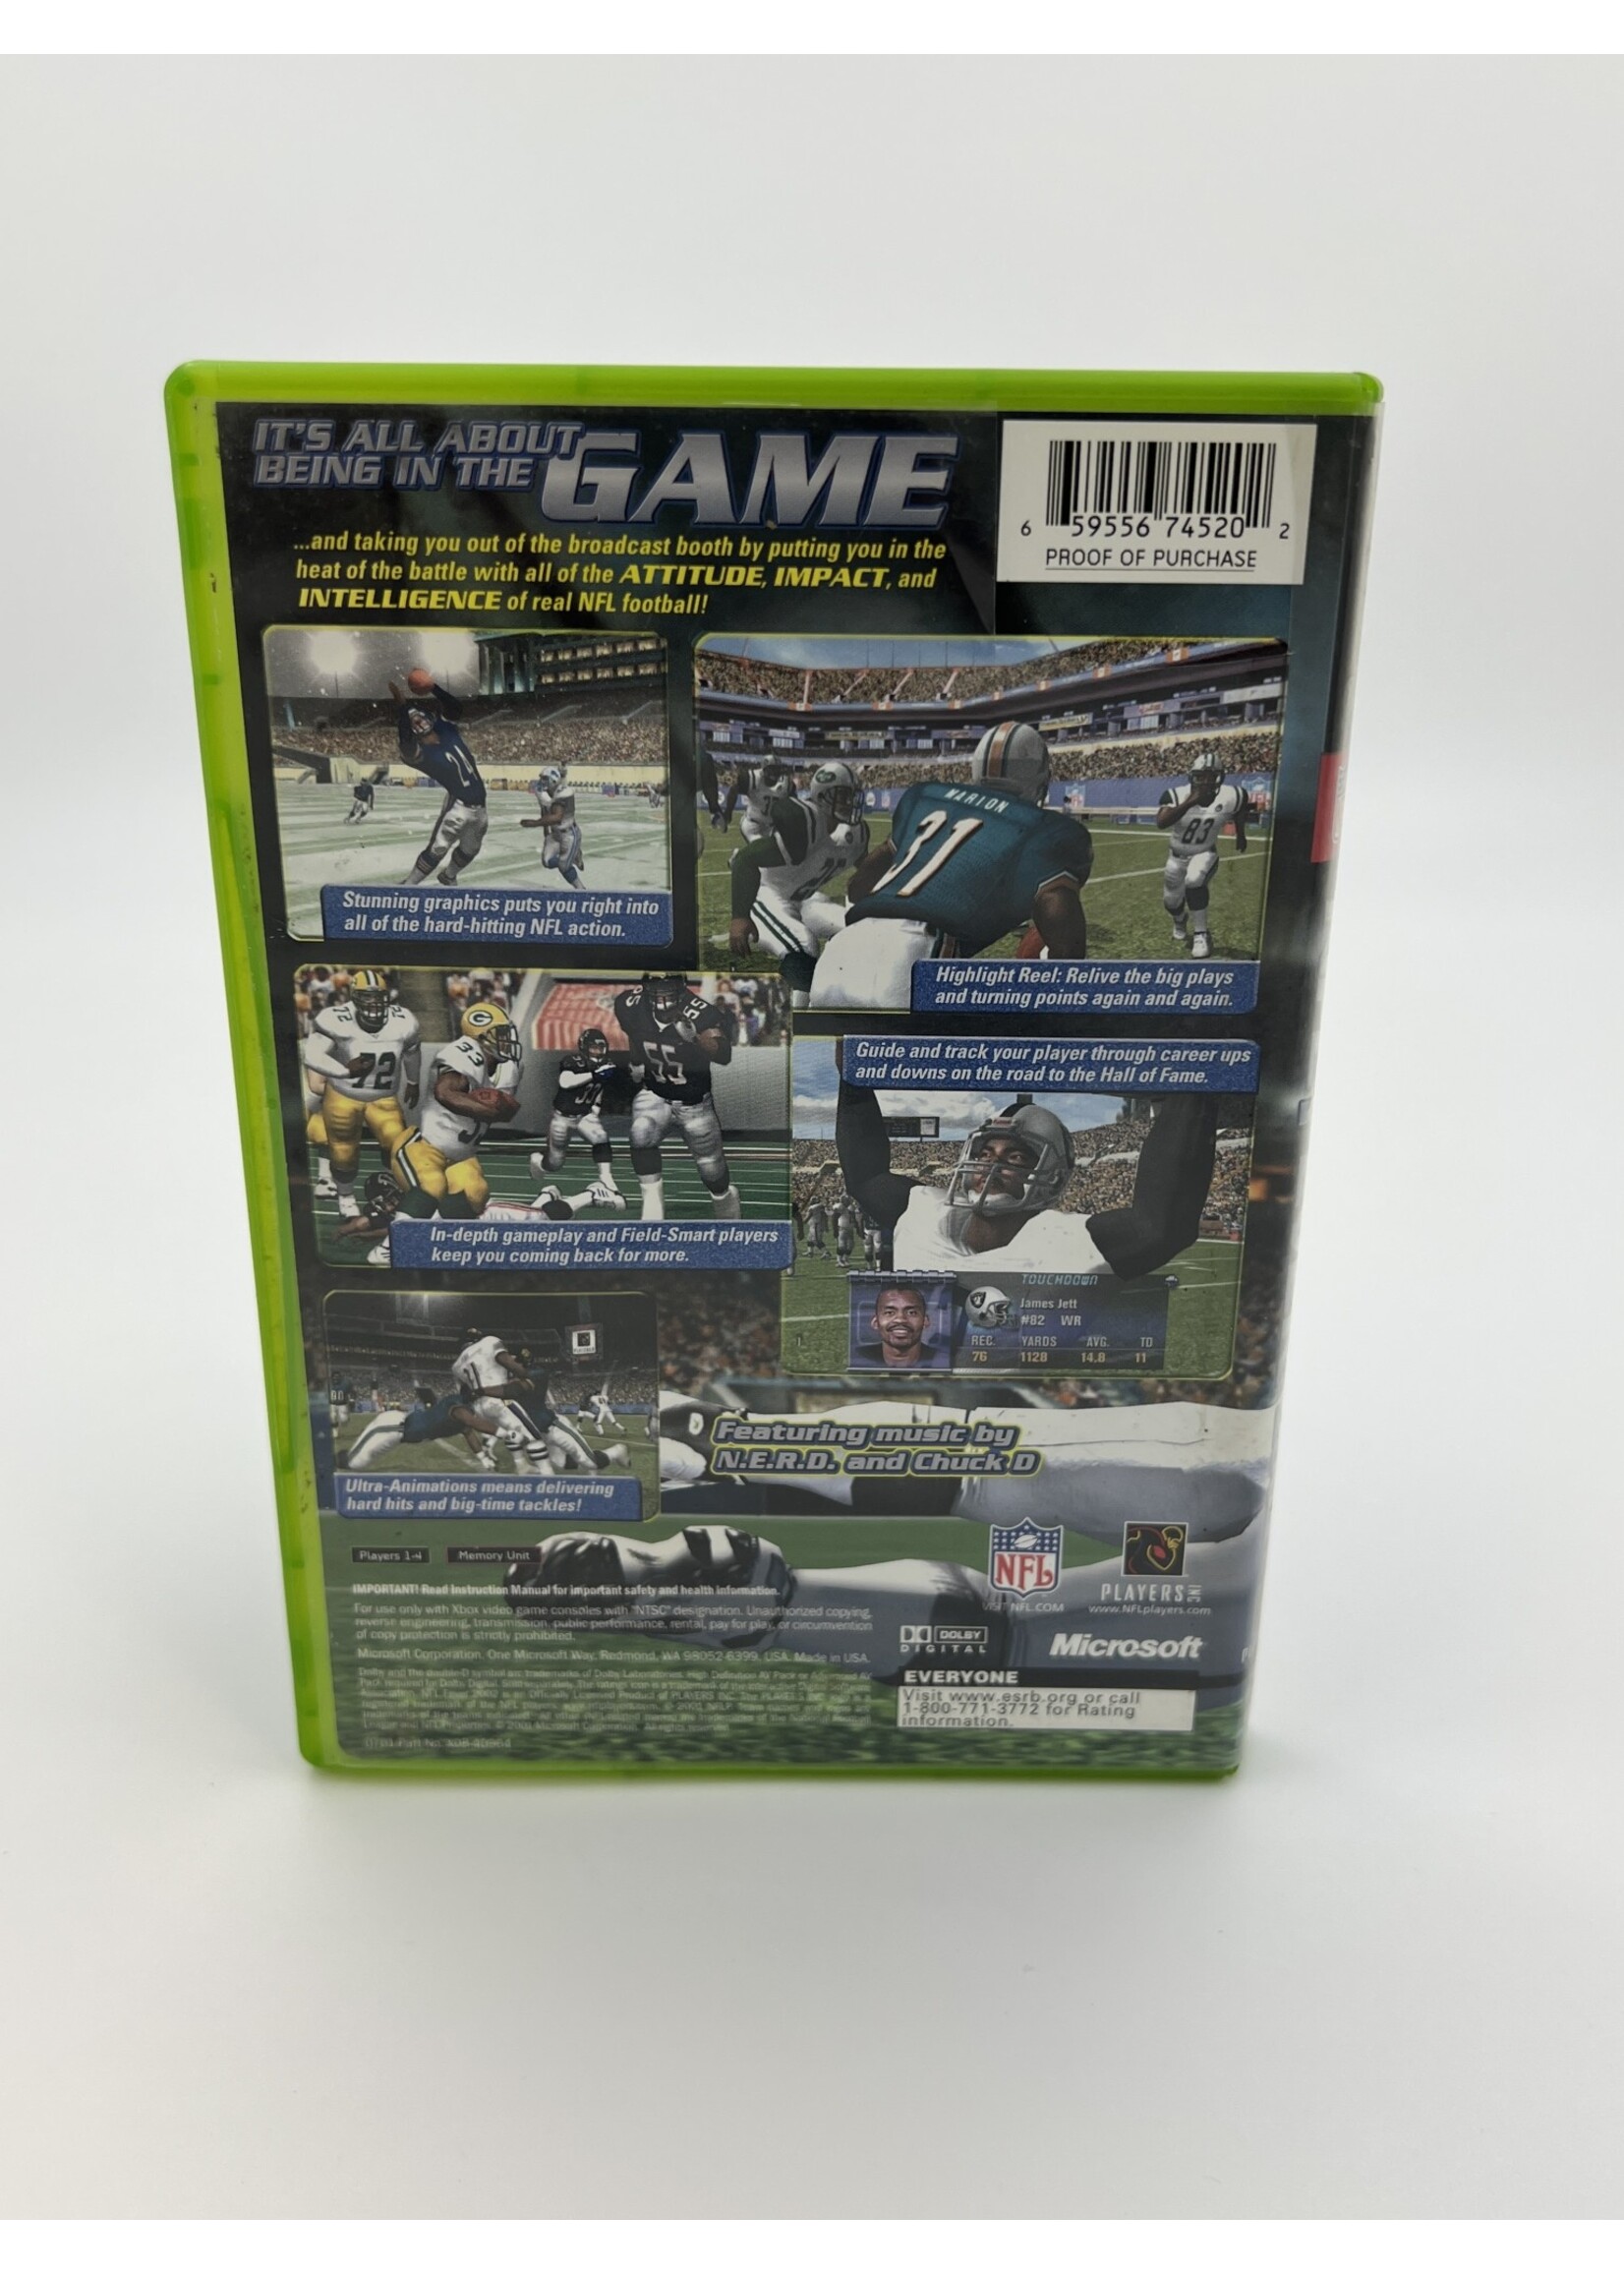 Xbox NFL Fever 2002